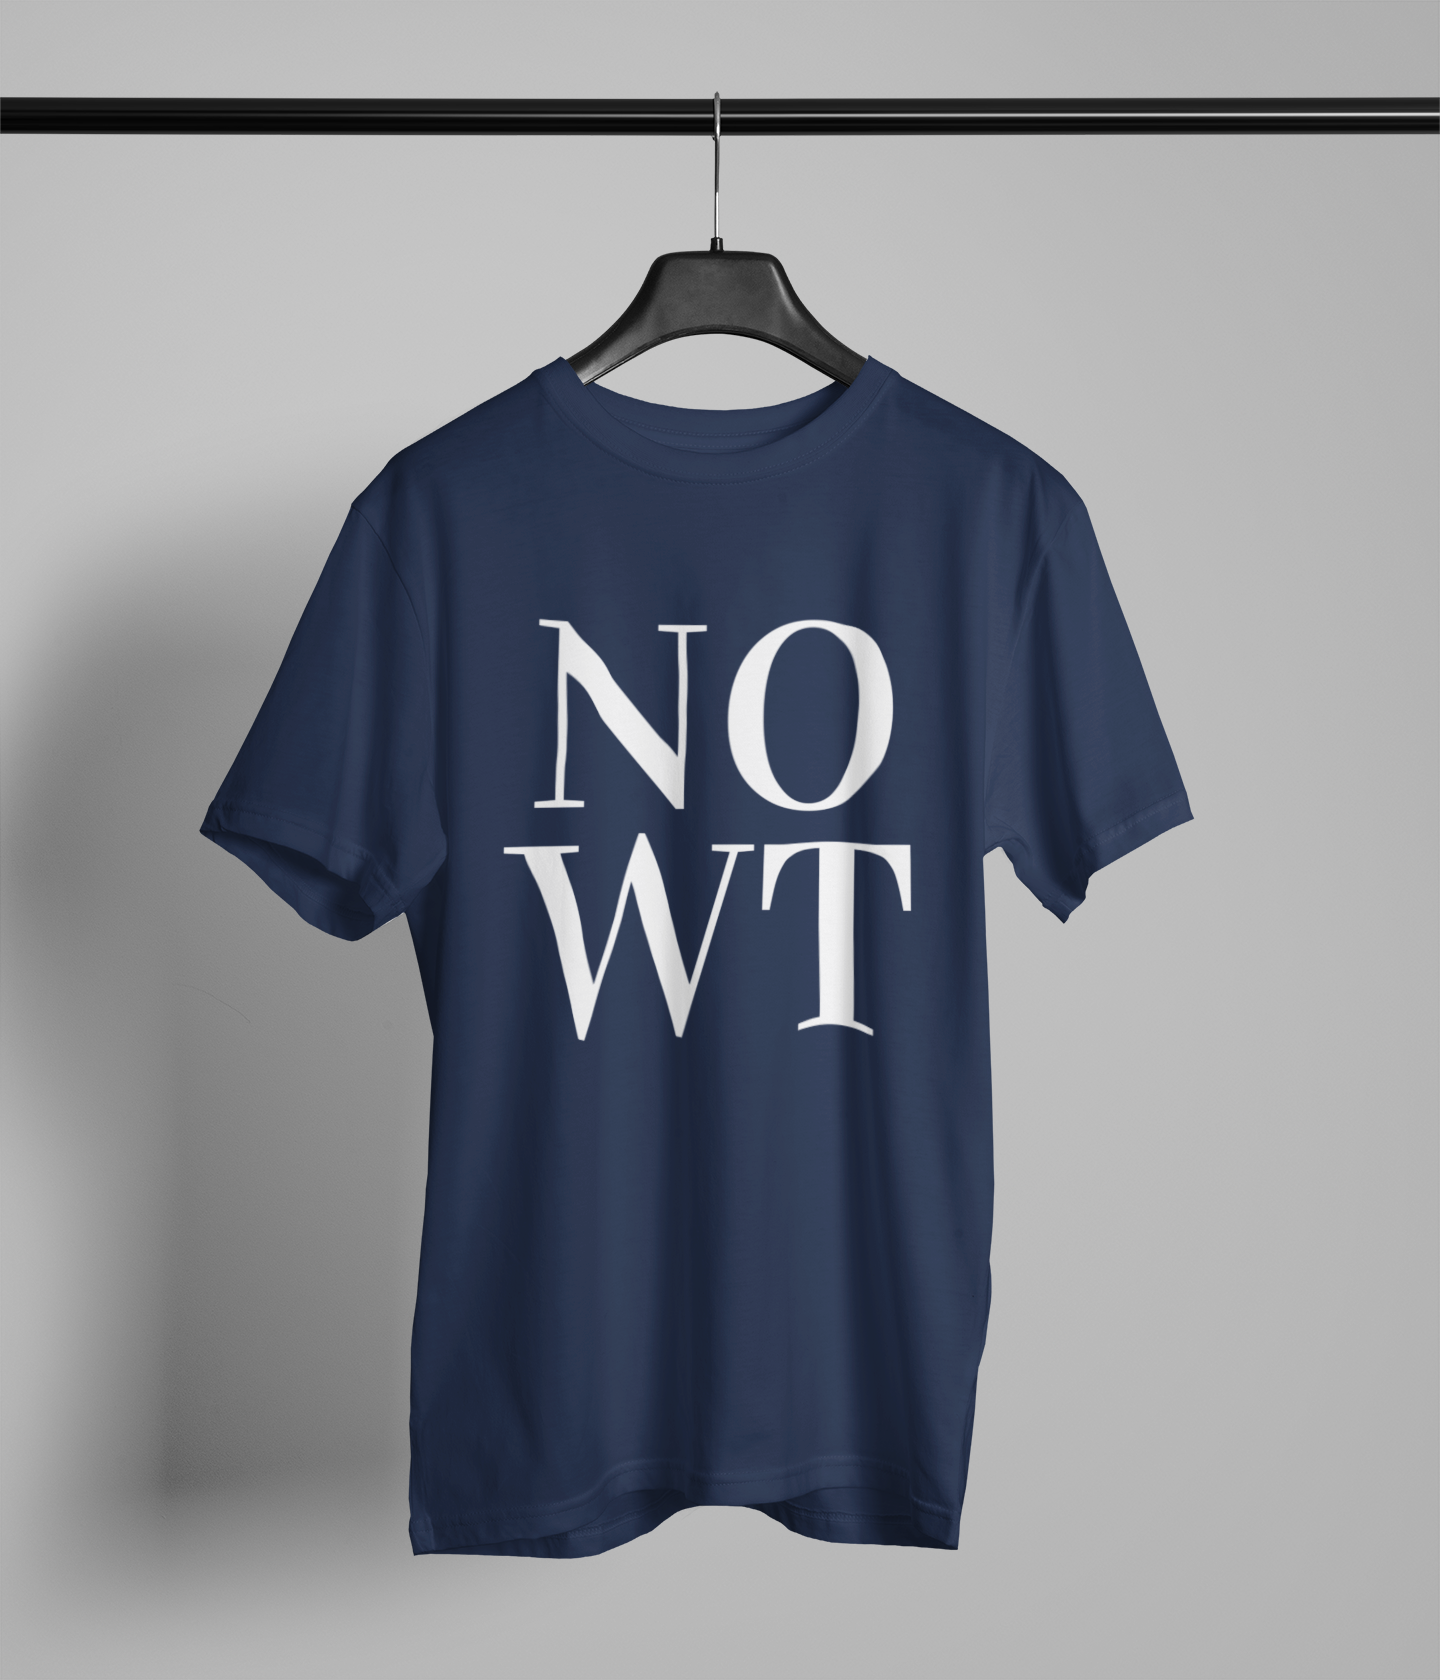 NOWT Northern Slang T-Shirt Unisex